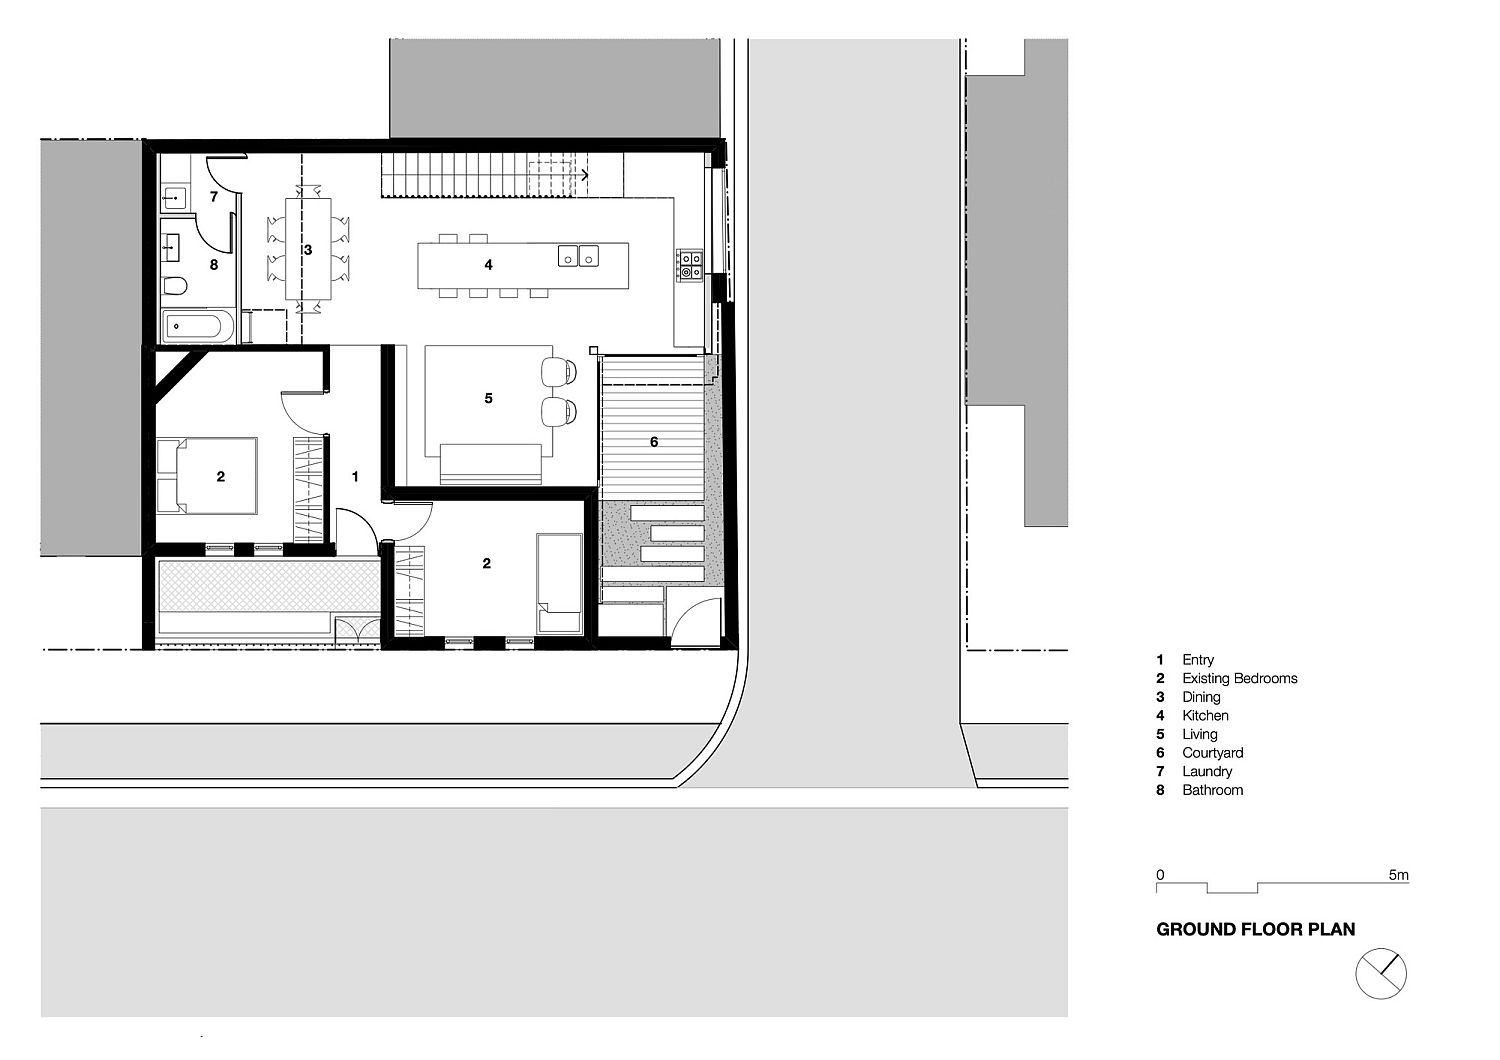 Ground floor plan of Machiya House in Australia